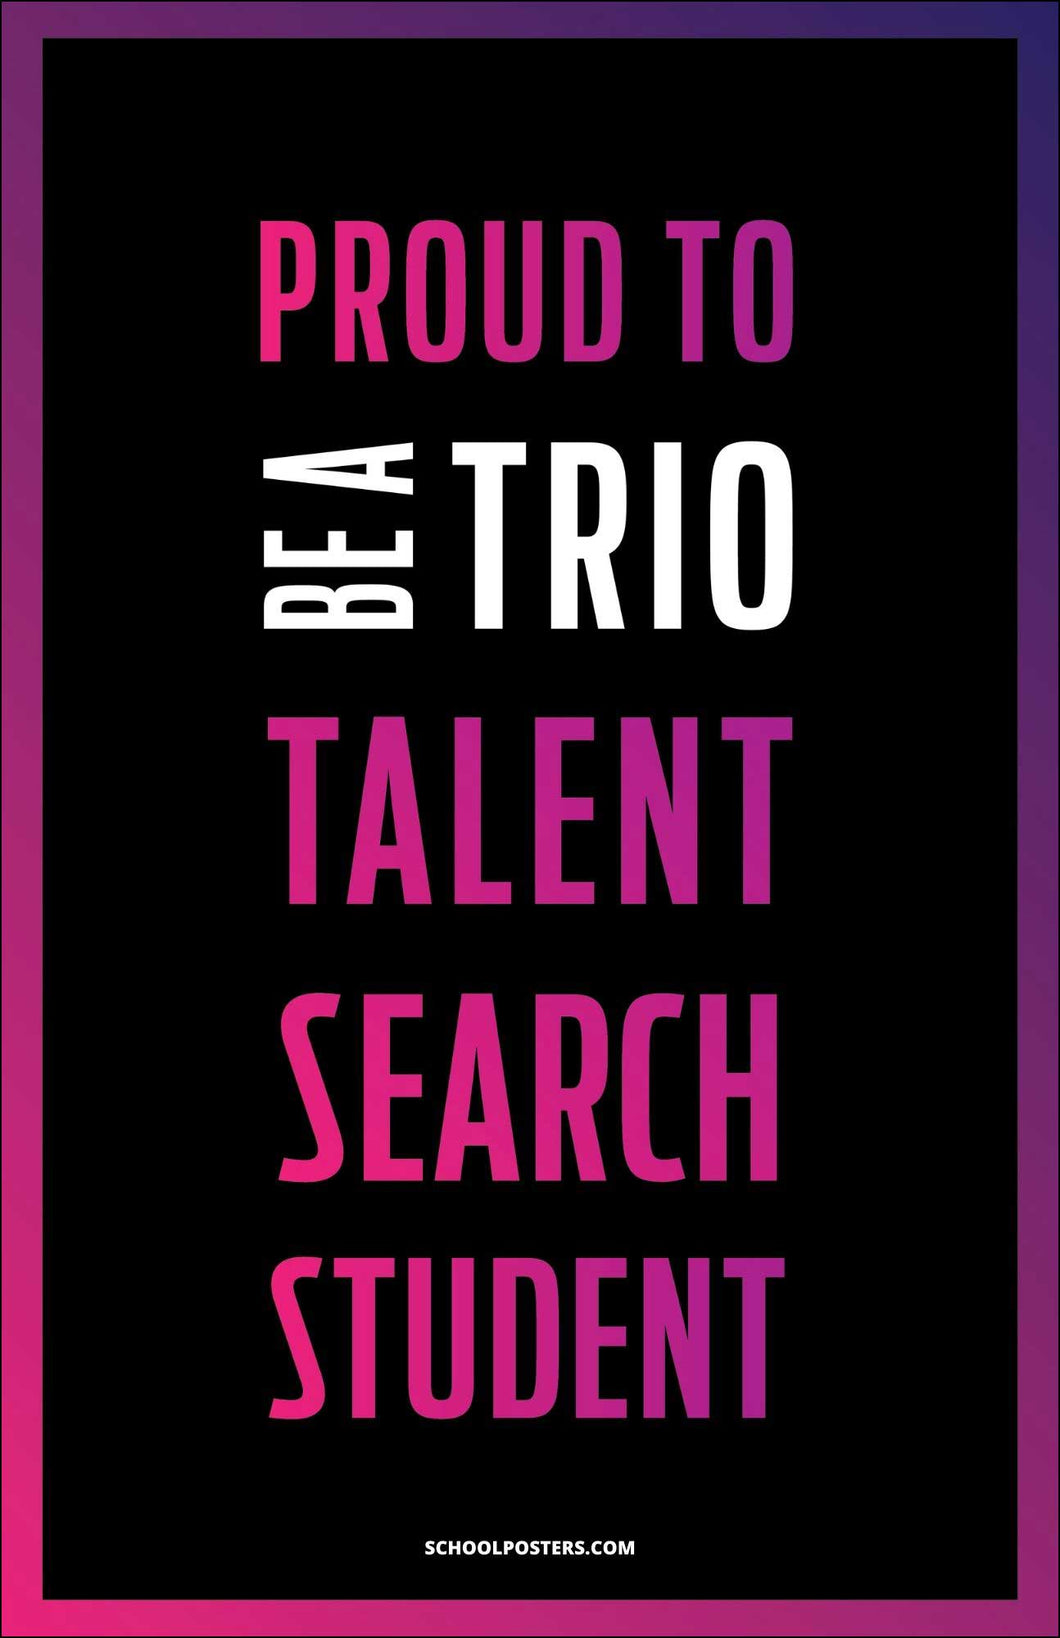 TRIO Talent Search Student Poster